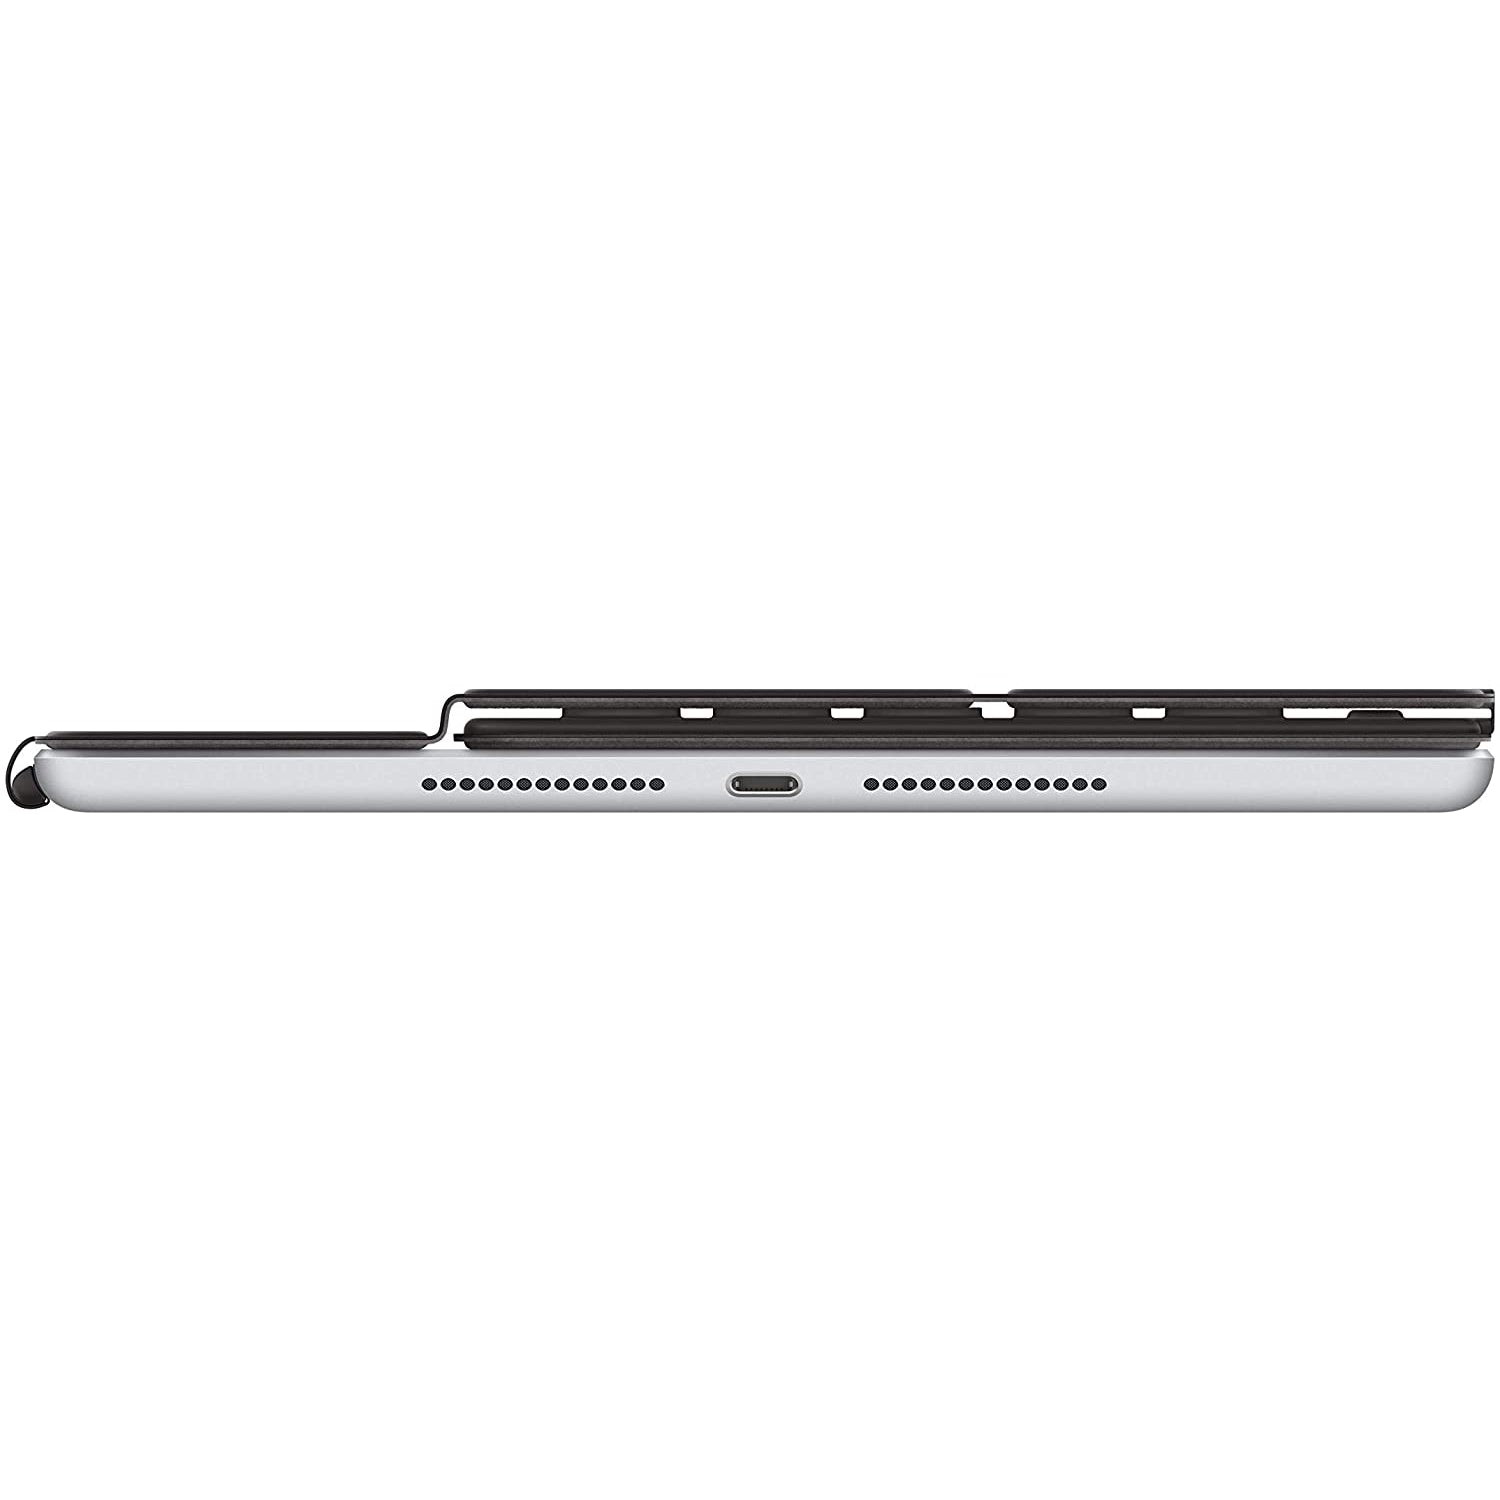 Apple Smart Keyboard MX3L2B/A for 10.5" iPad - Black - Refurbished Excellent